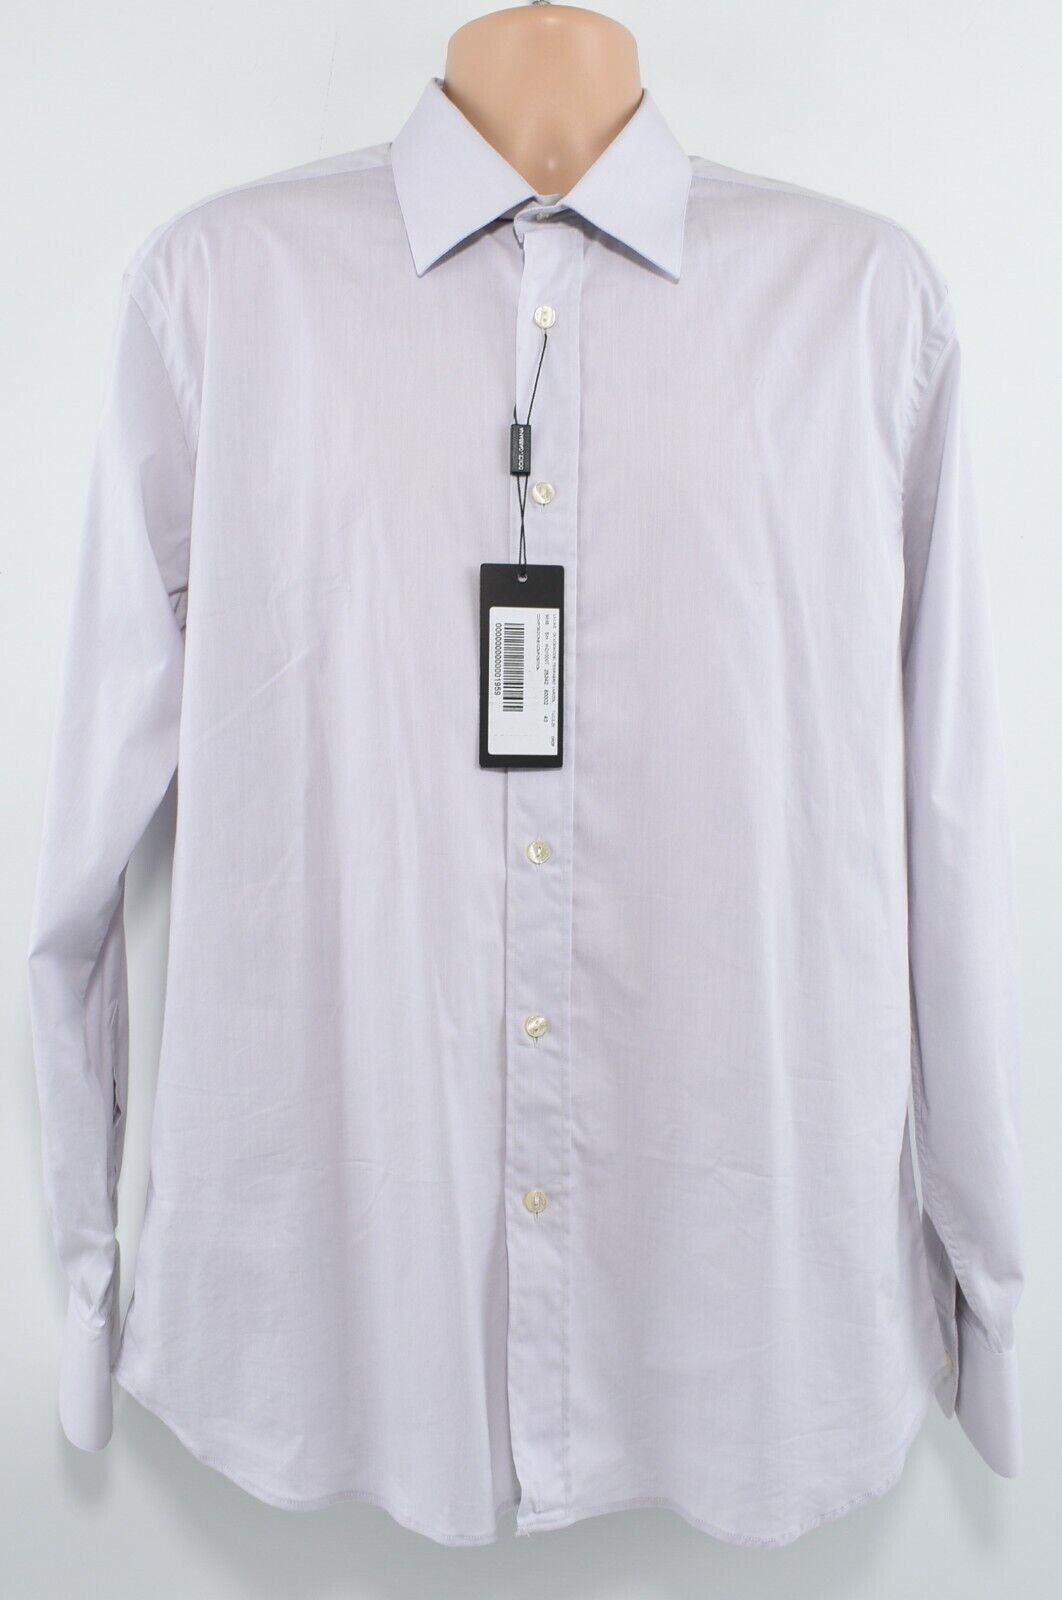 DOLCE & GABBANA Men's Long Sleeve Light Grey Shirt, size collar 17"